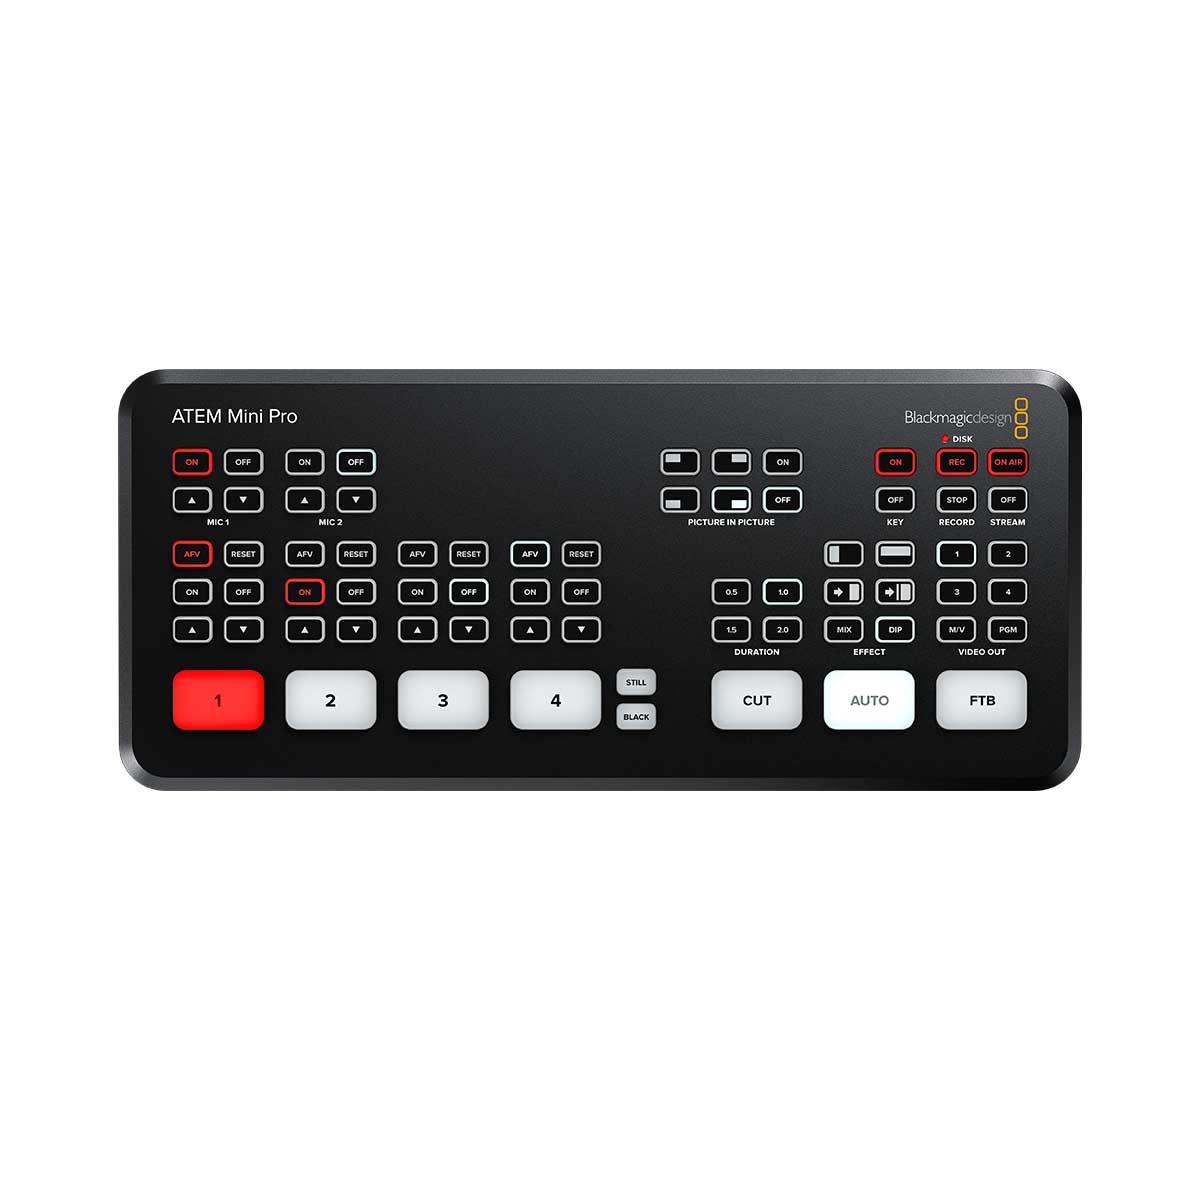 Blackmagic ATEM Mini Pro Video Production Switcher